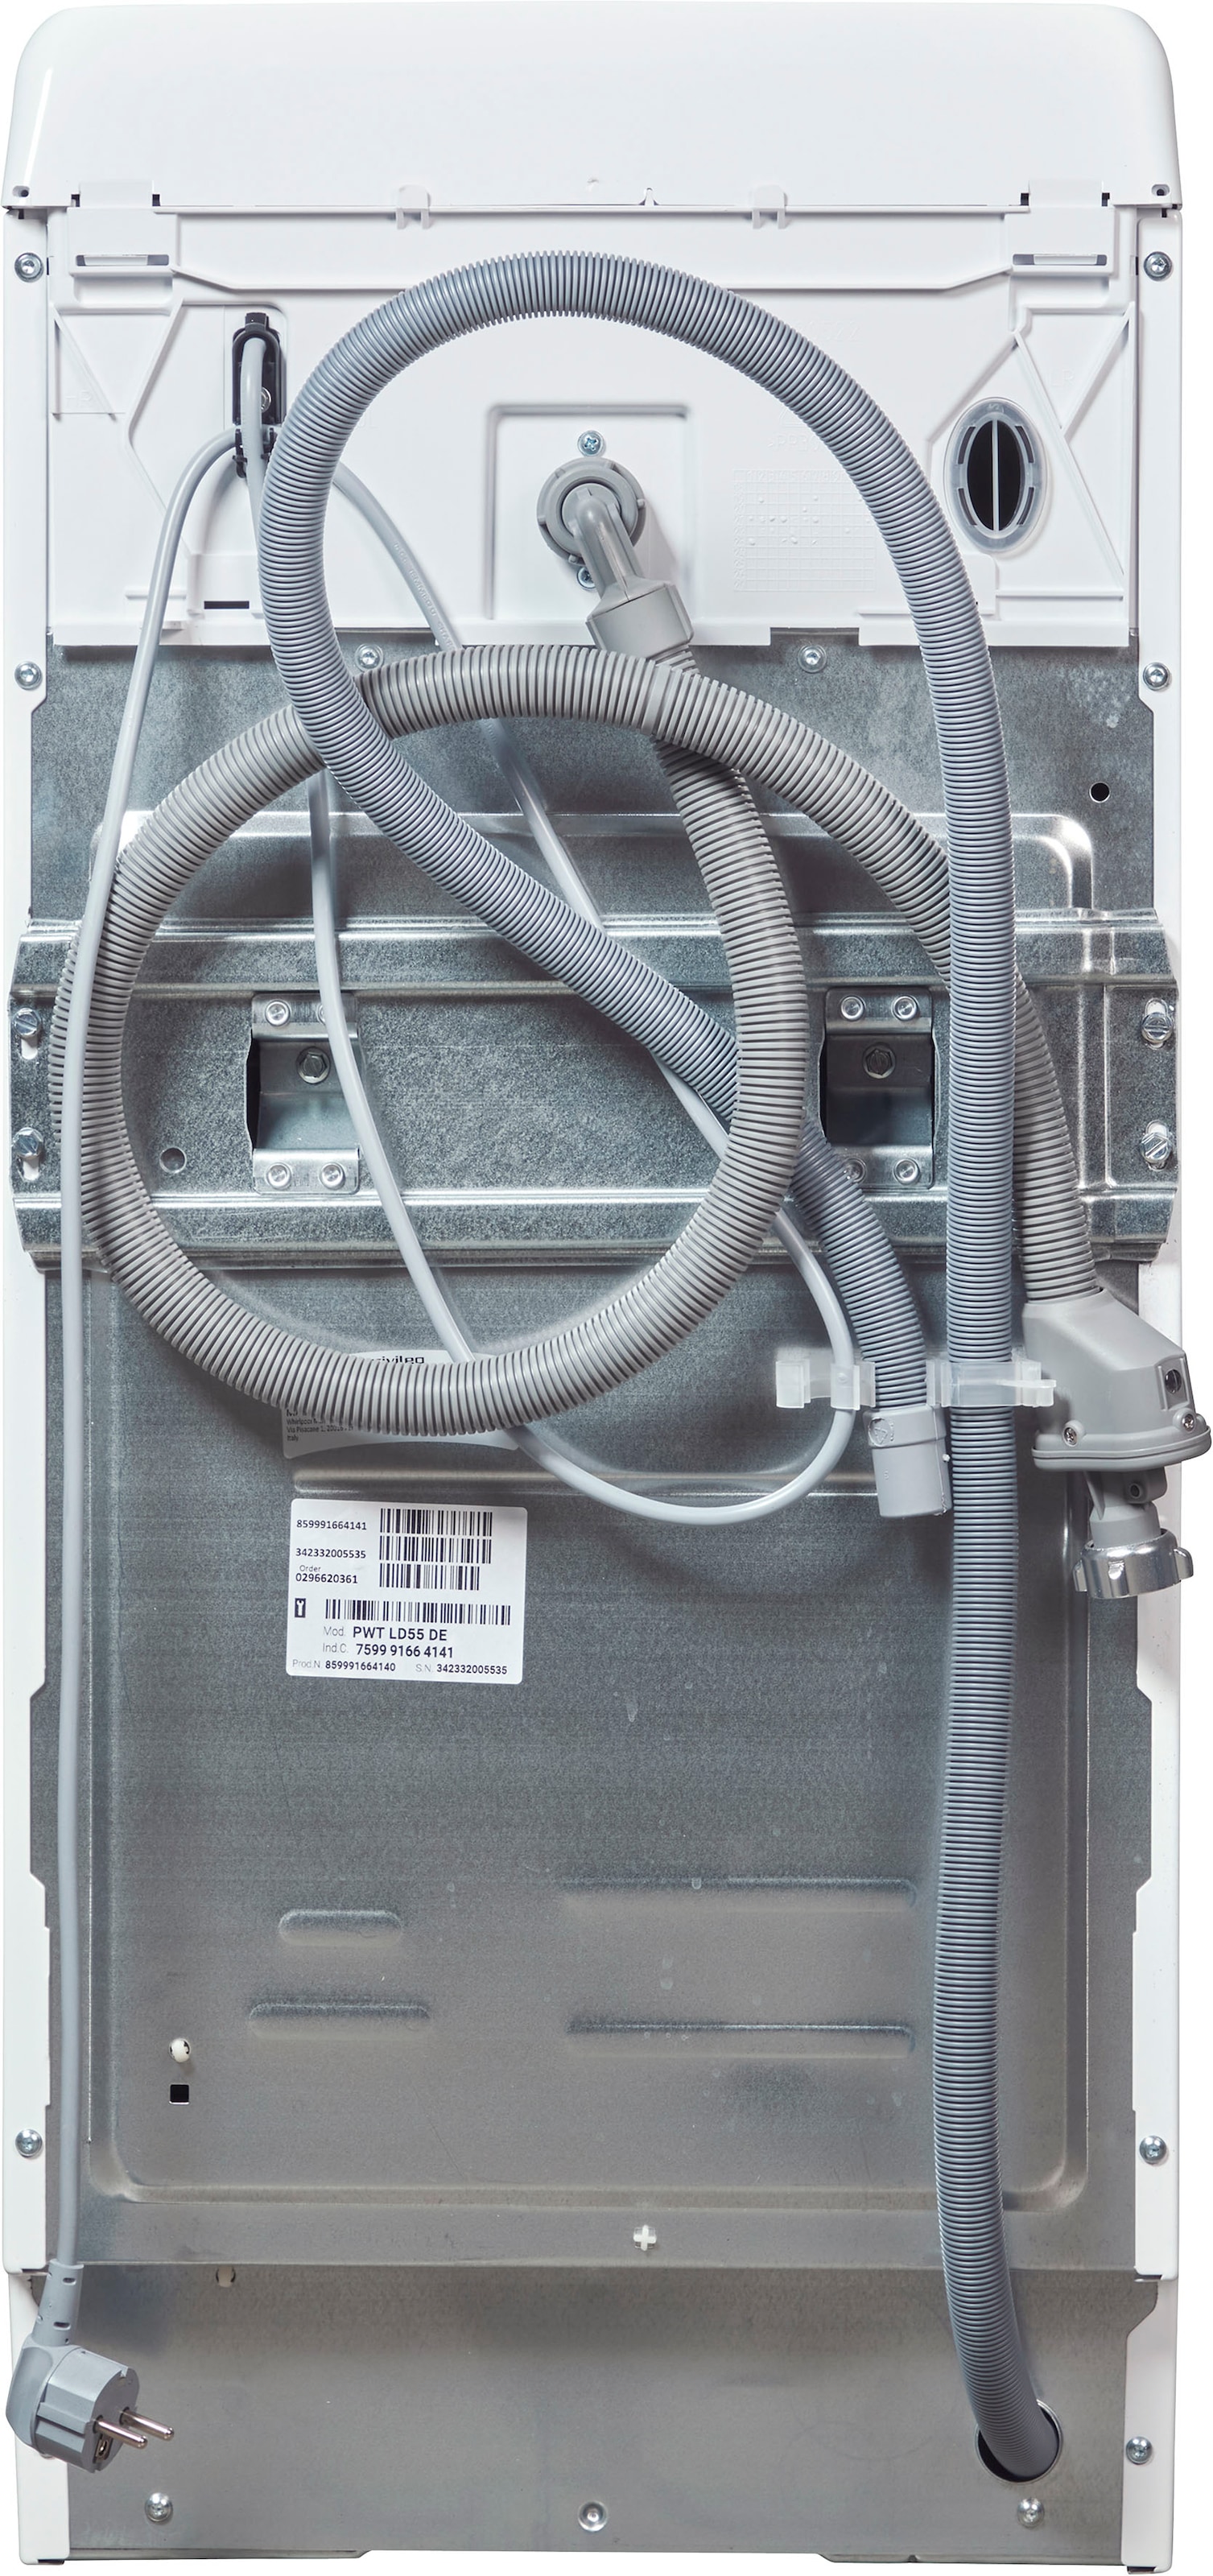 Privileg Waschmaschine Toplader »PWT LD55 DE«, PWT LD55 DE, 5,5 kg, 1100 U/min